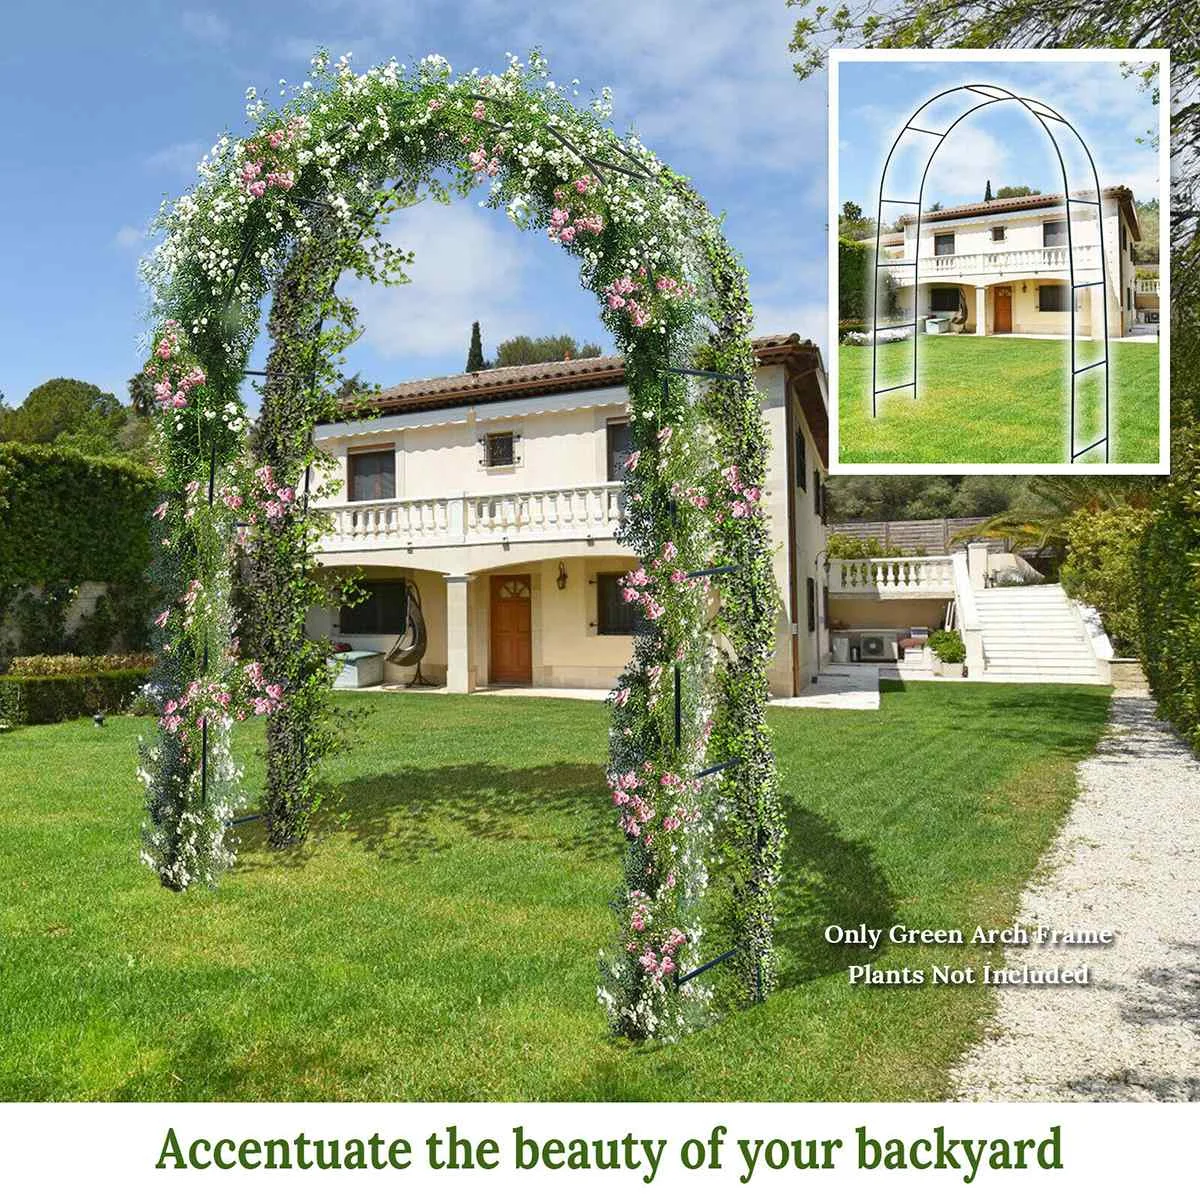 DIY Iron Wedding Arch Decorative Garden Backdrop Pergola Stand Flower Frame For Marriage birthday wedding Party Decoration